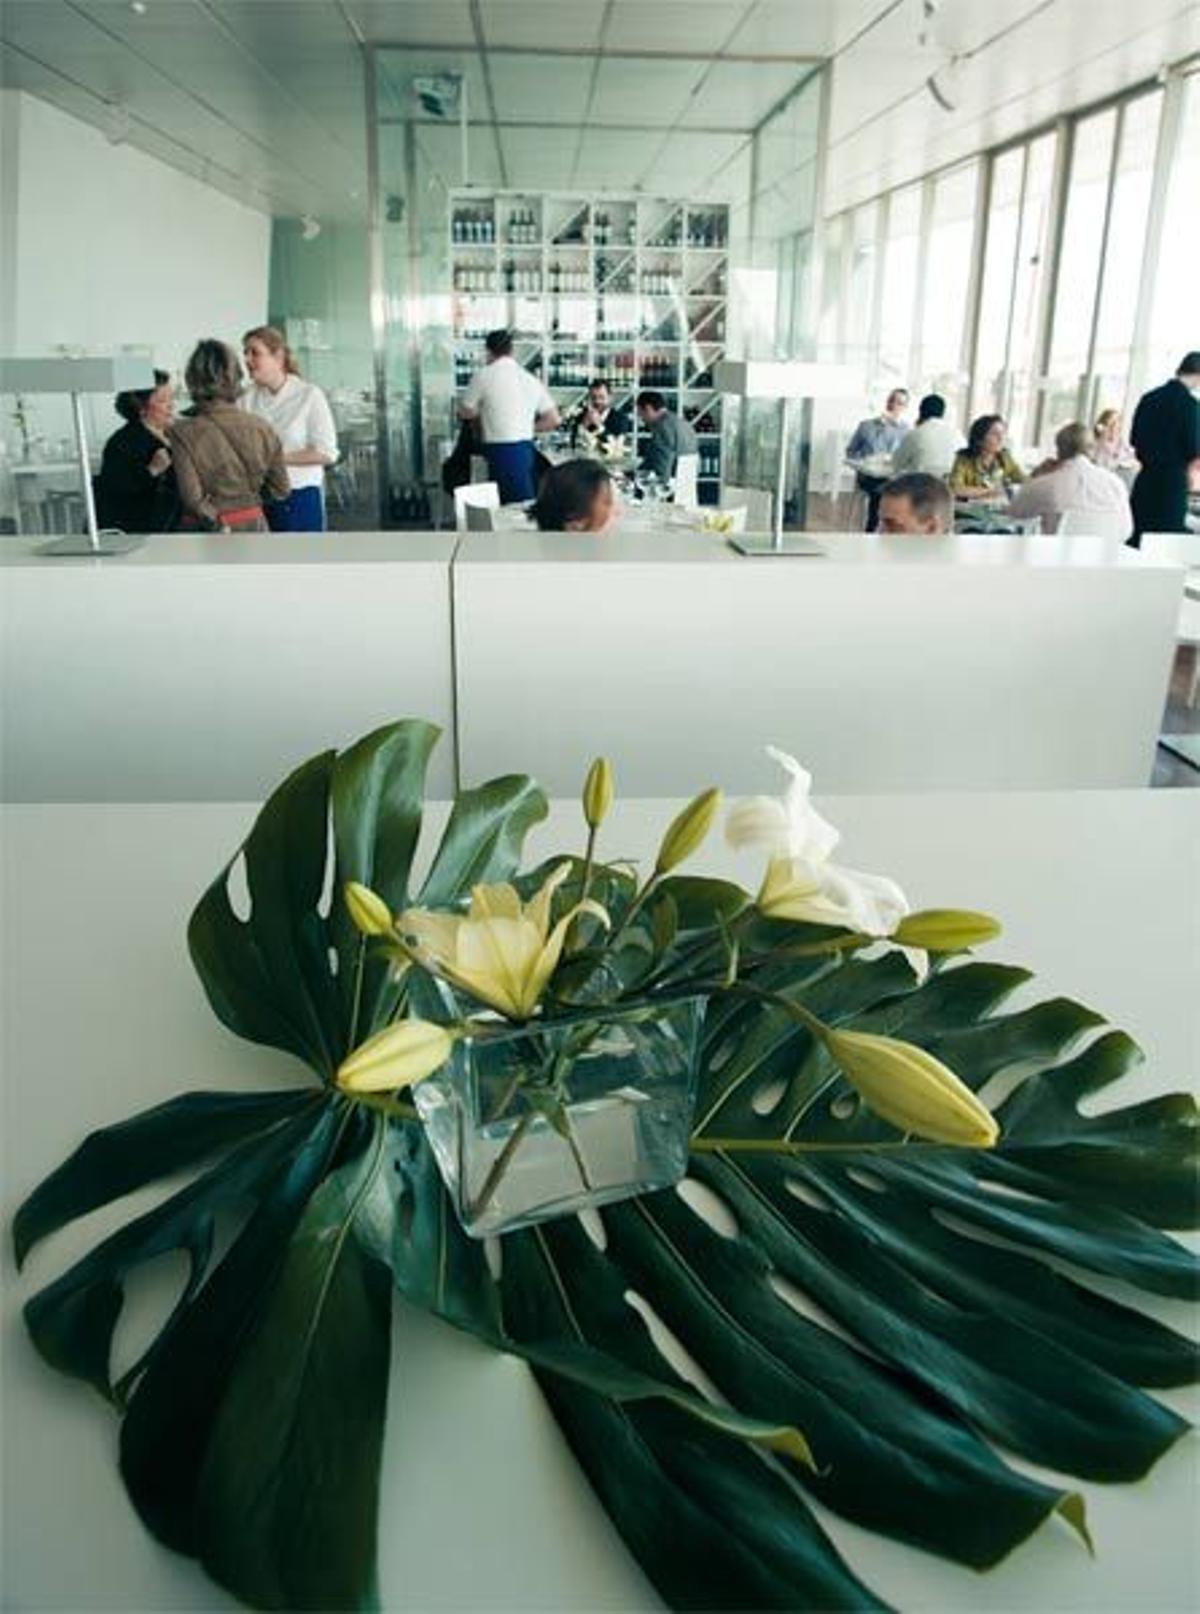 La terraza del
restaurante Bianco,
que corona el edificio
&quot;Veles e Vents&quot;, el nuevo
símbolo de